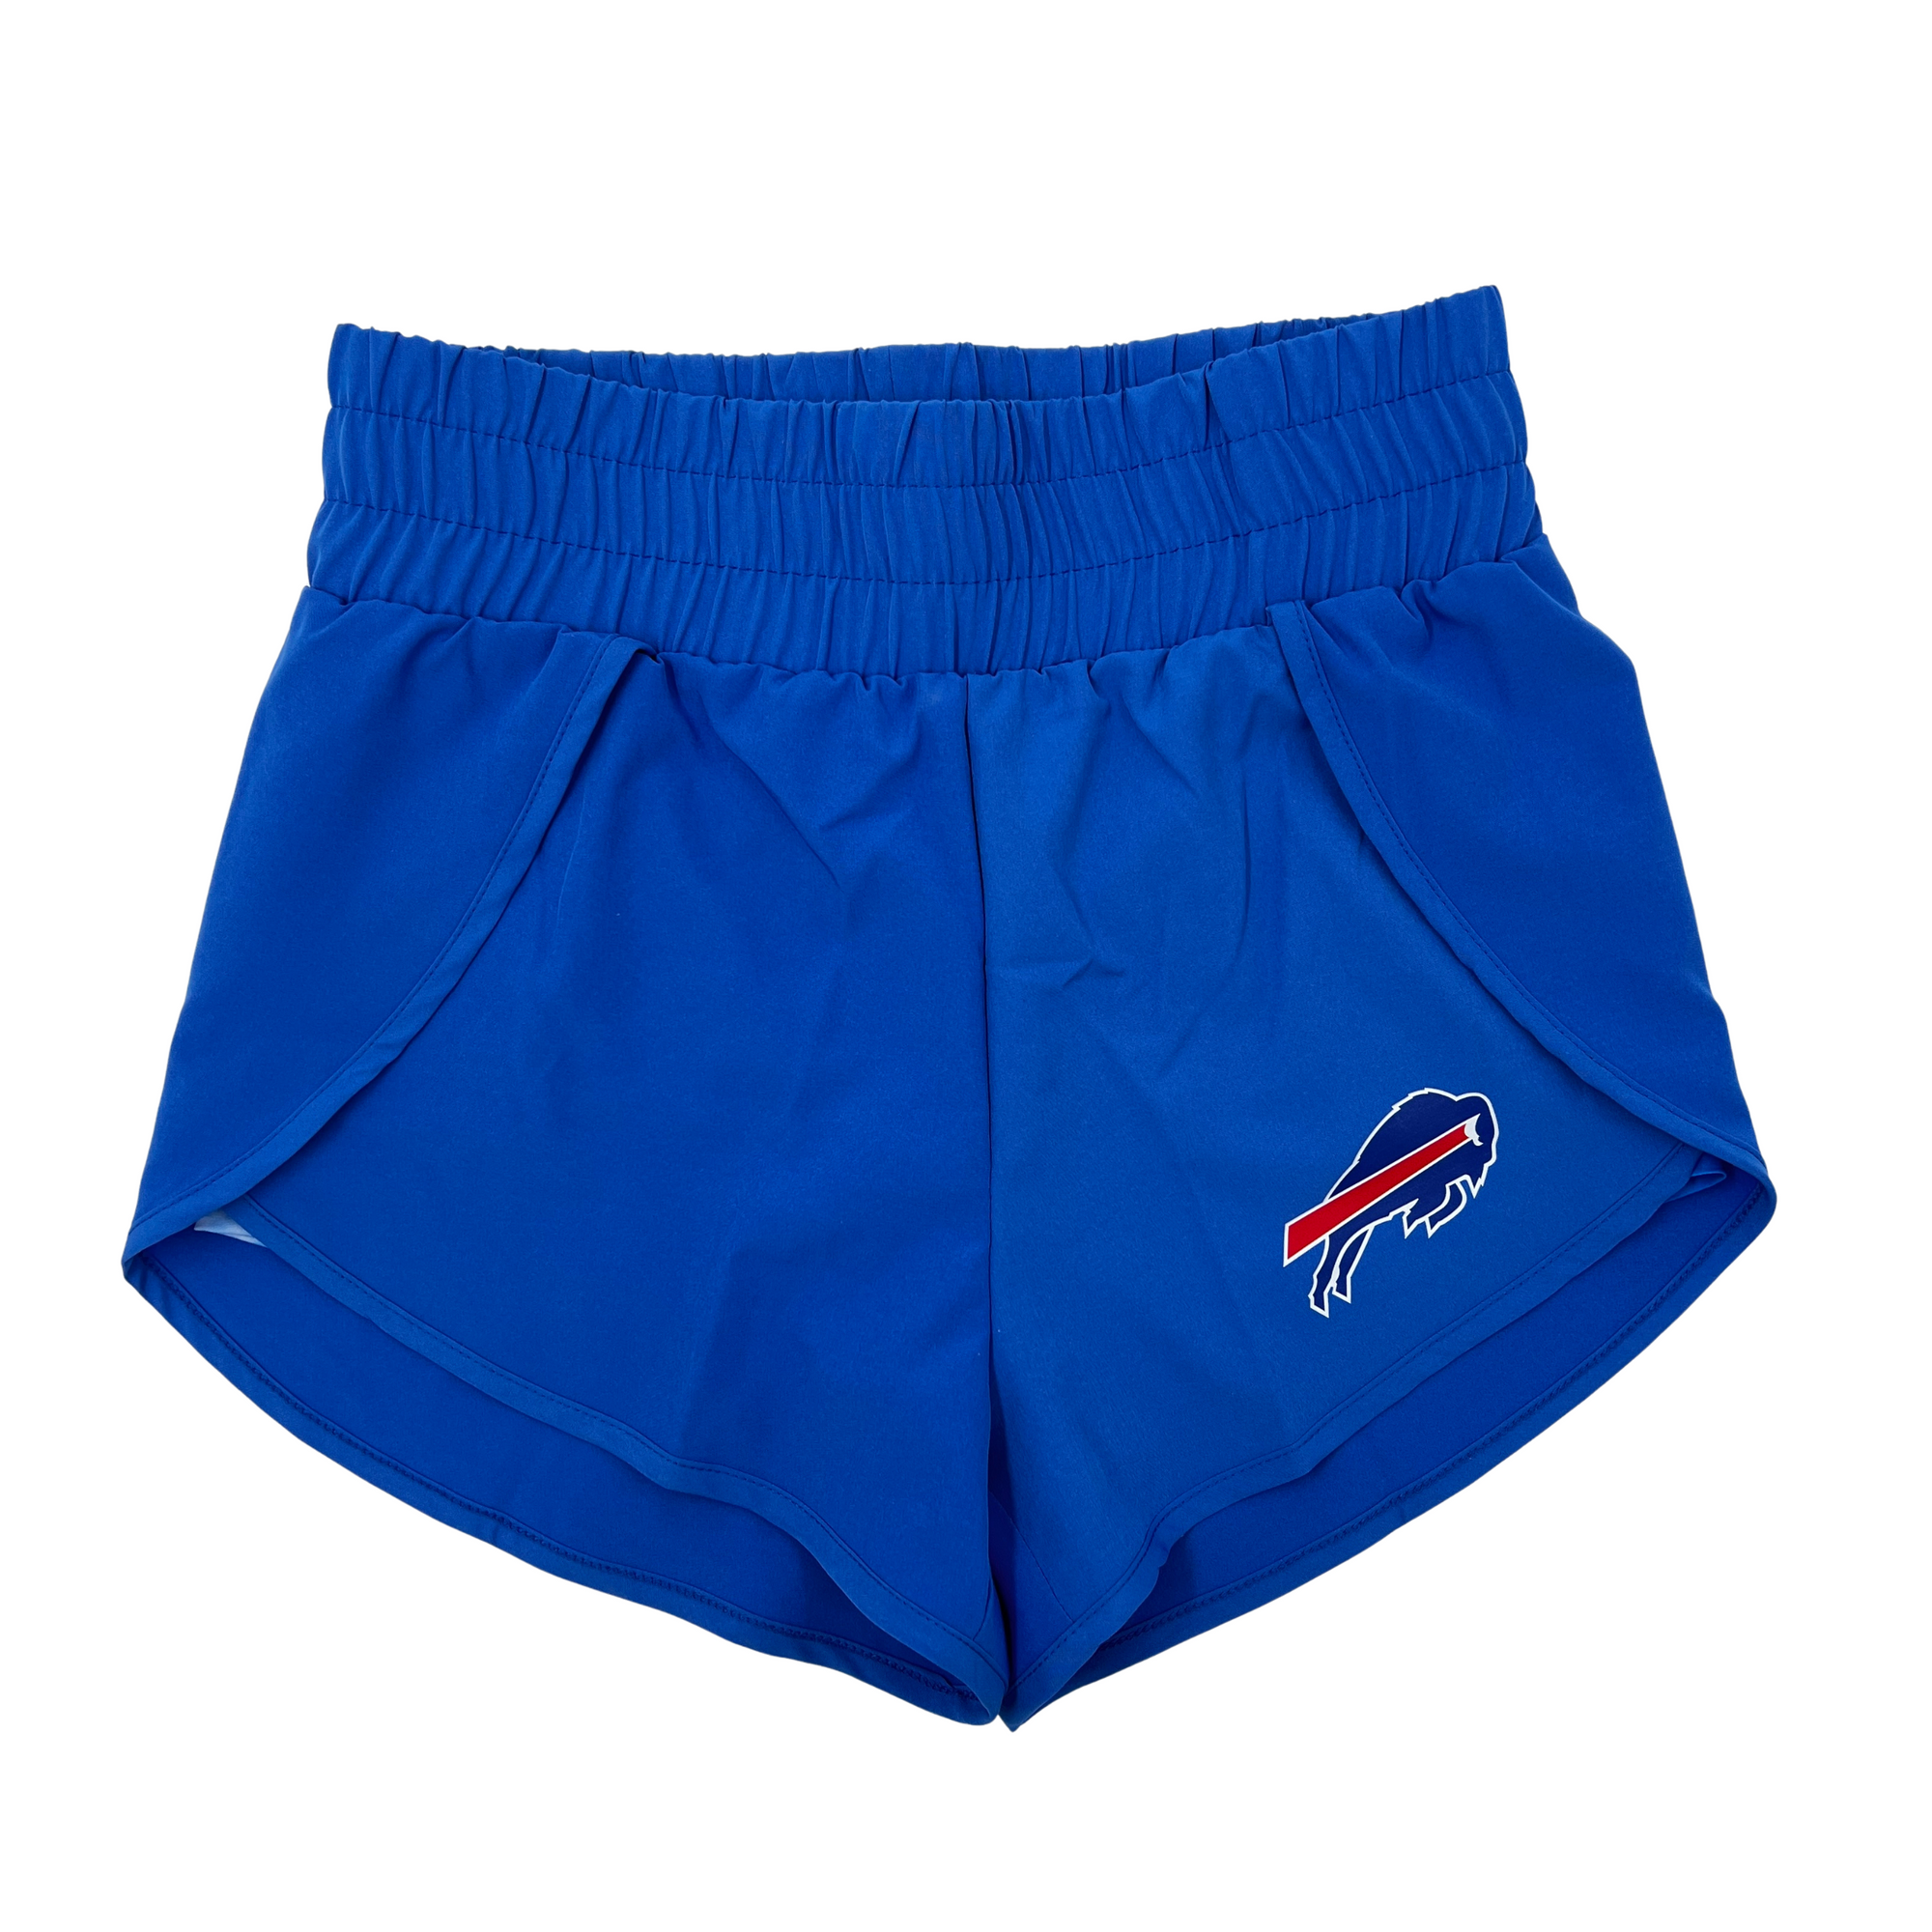 Women's Buffalo Bills Royal Blue Running Shorts With Tie Dye Liner